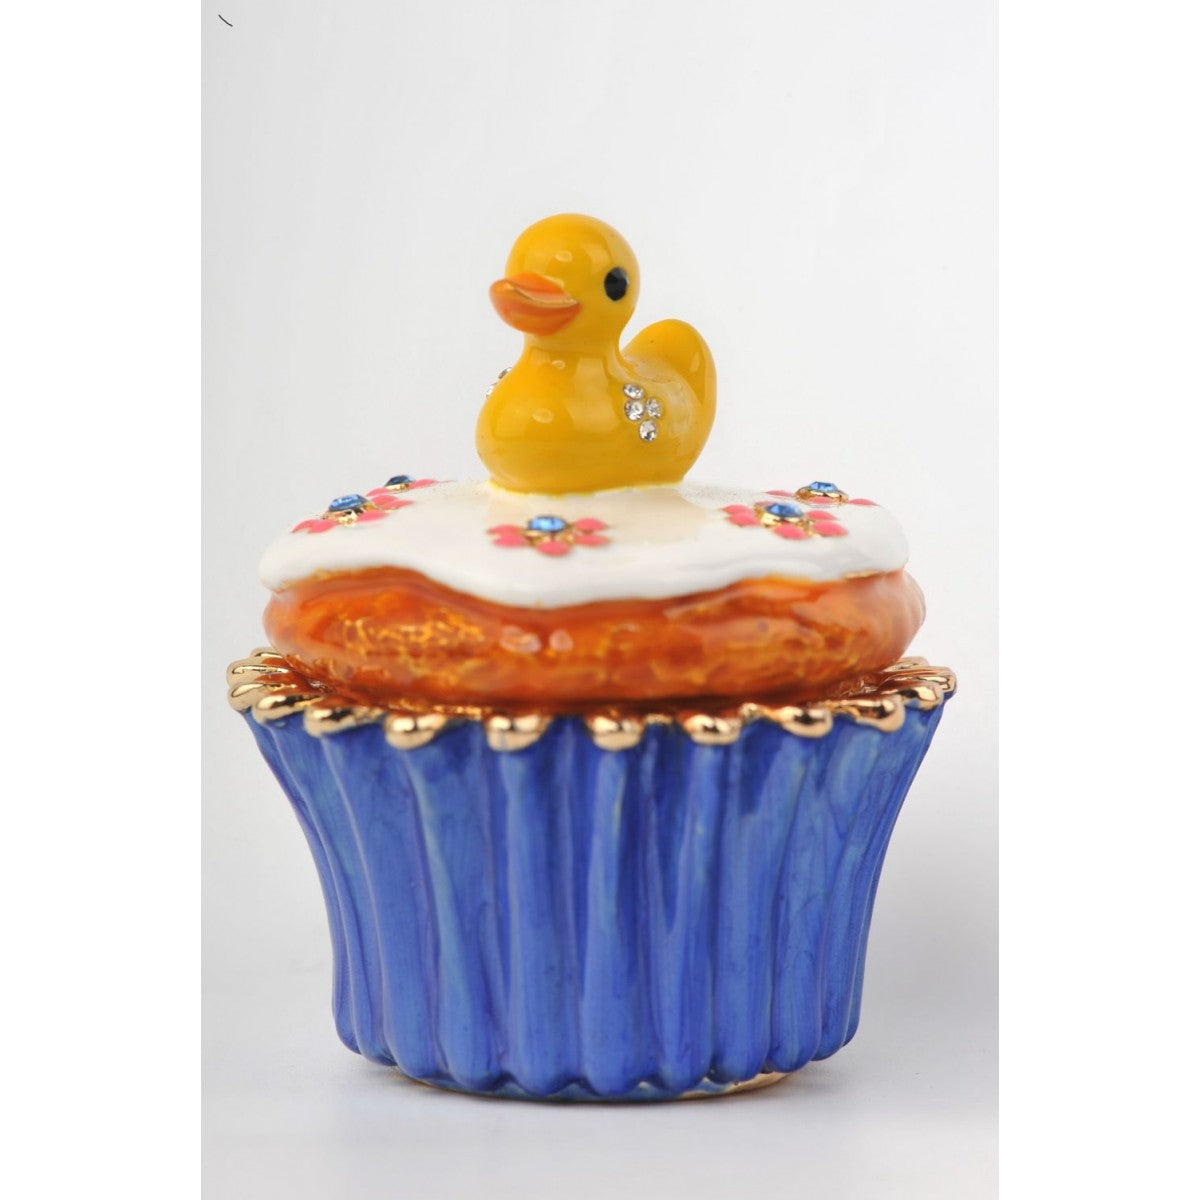 Yellow Duck on Blue Cupcake by Keren Kopal